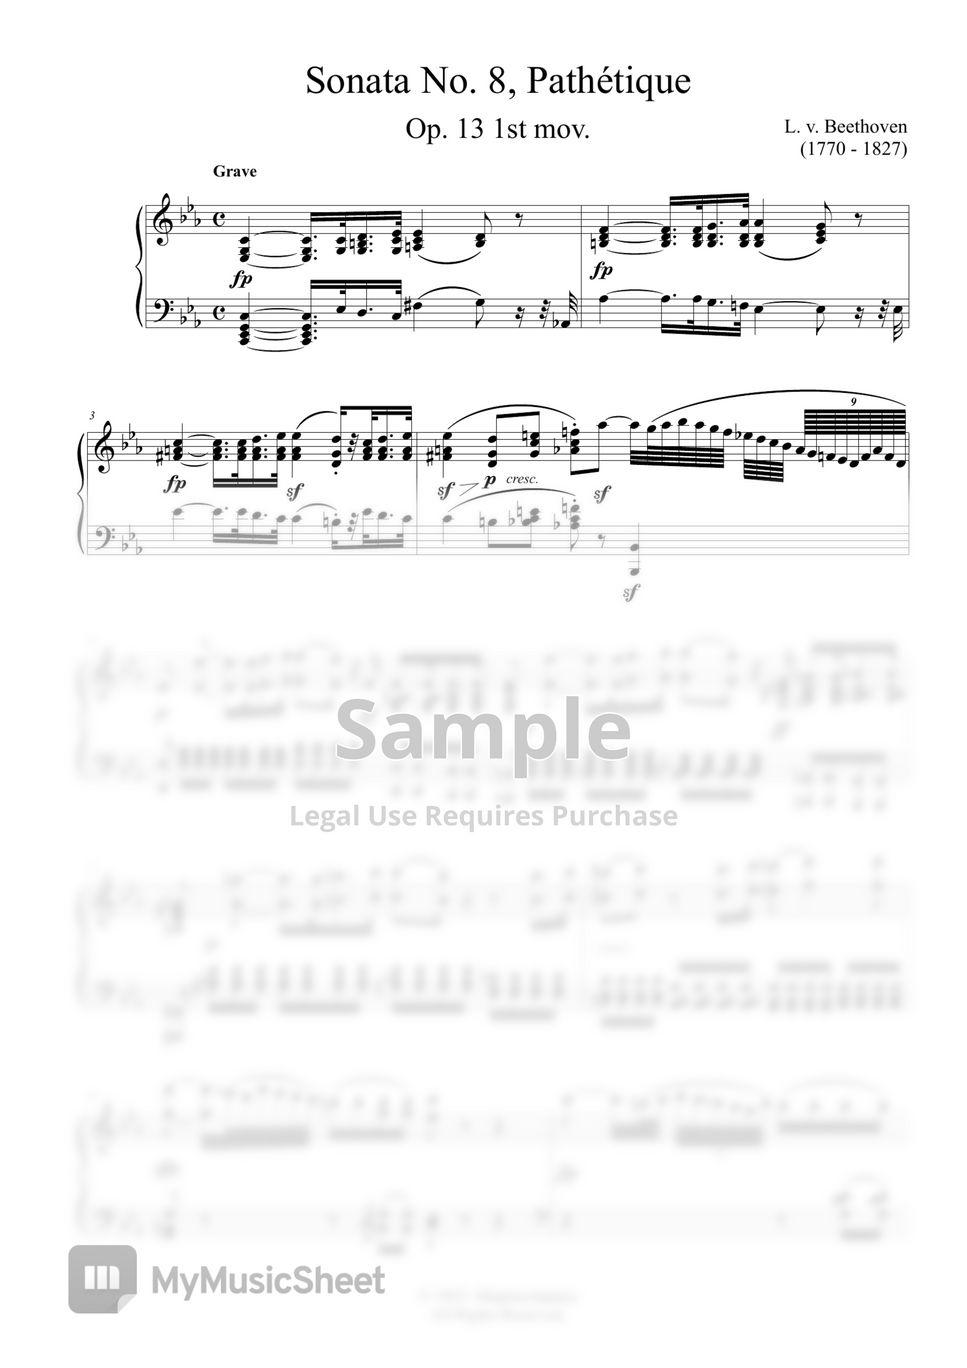 L. V. Beethoven - Pathetique (Piano Sonata No.8, 1st mov.)